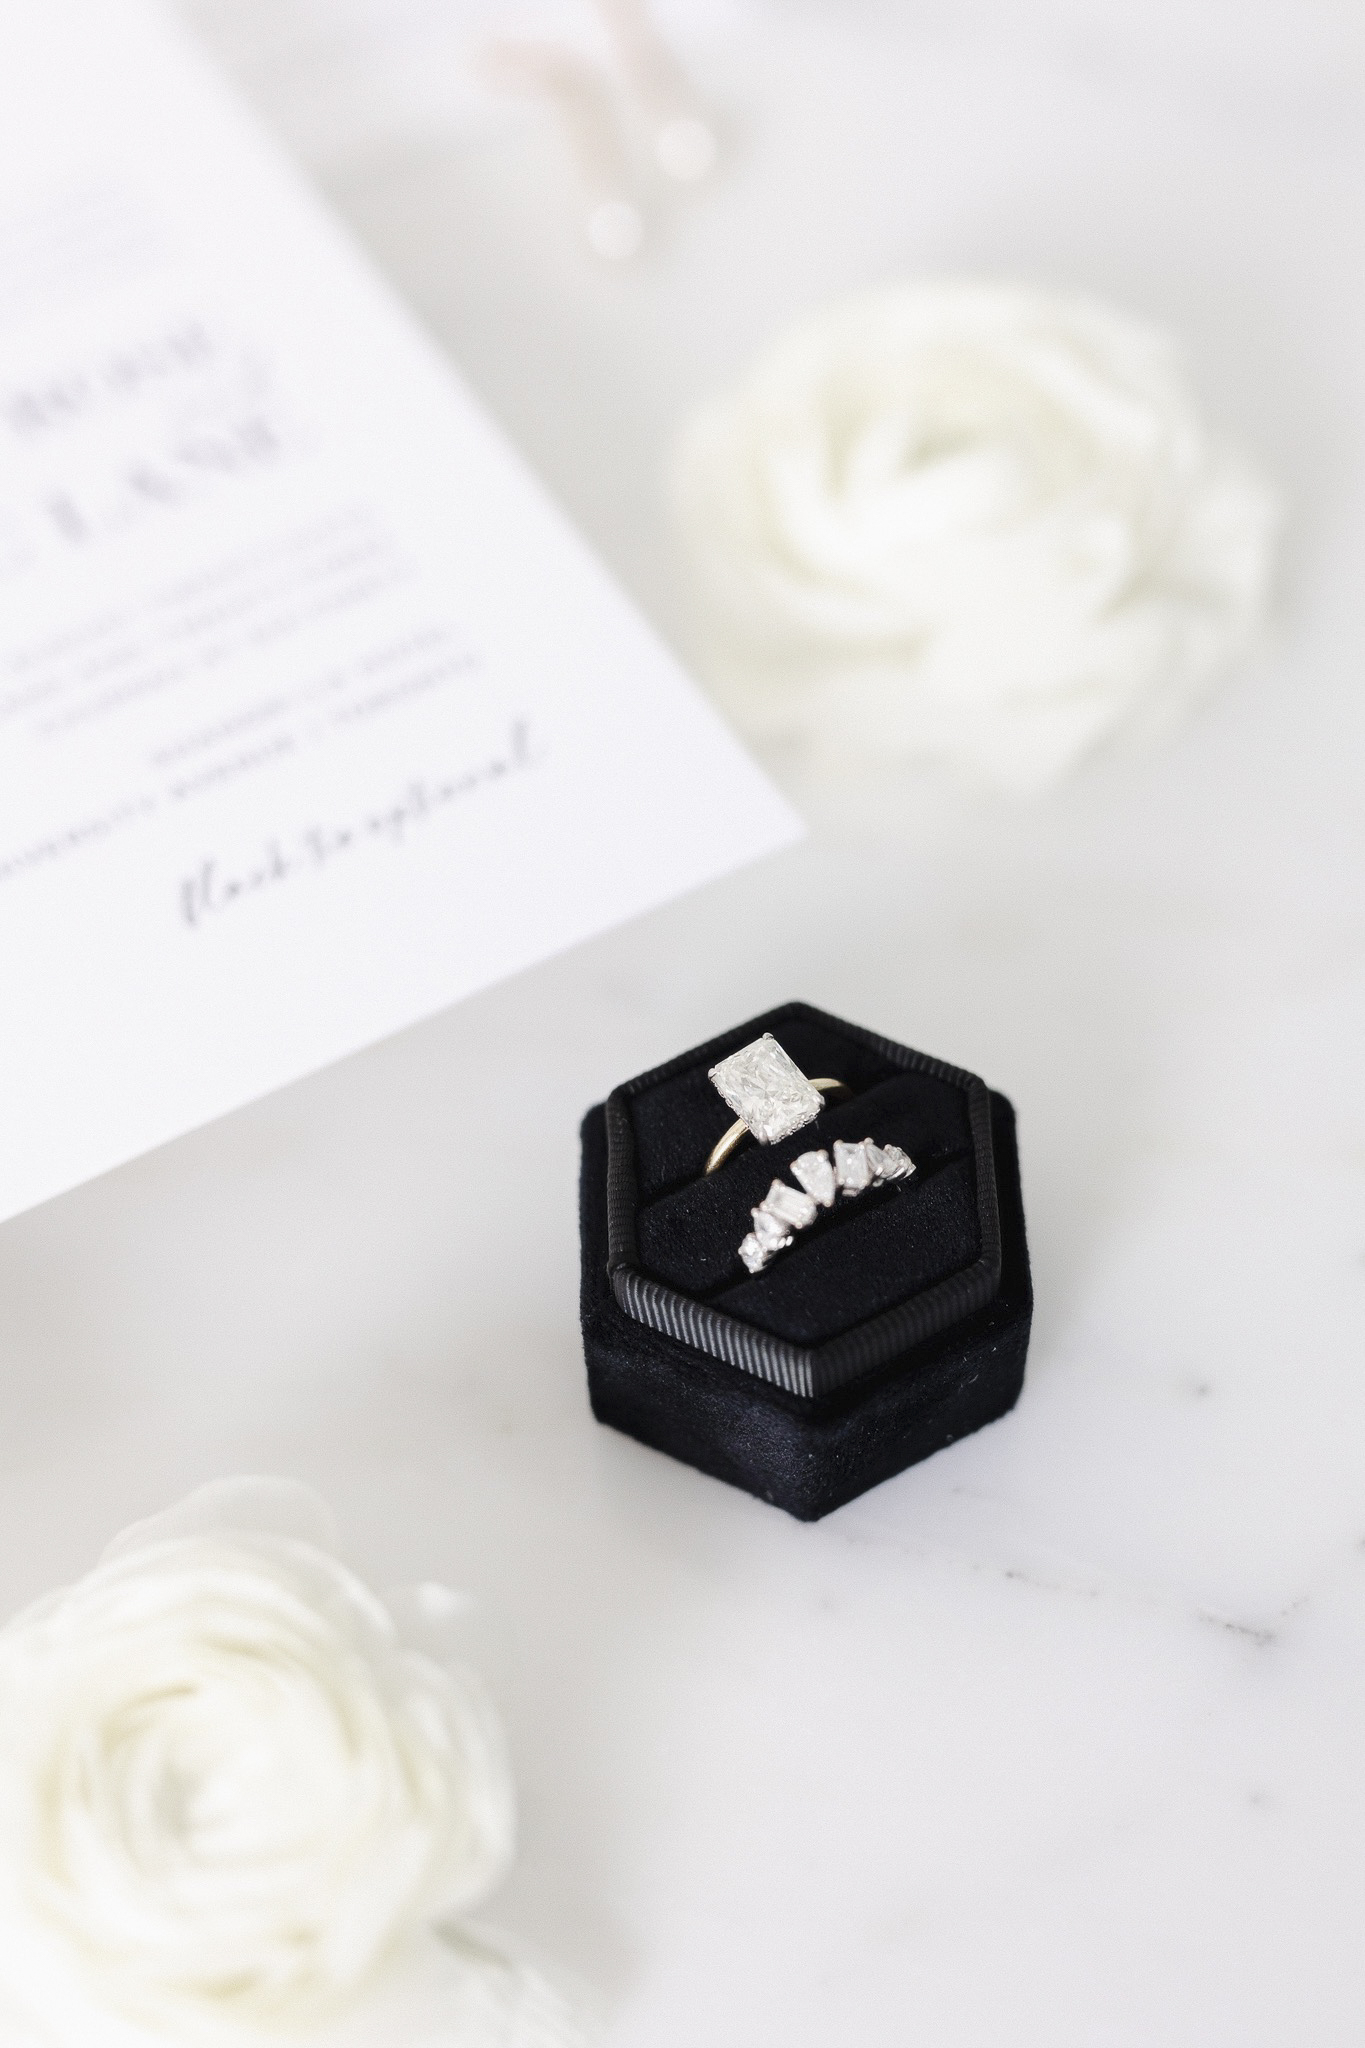 A wedding ring in a black ring box